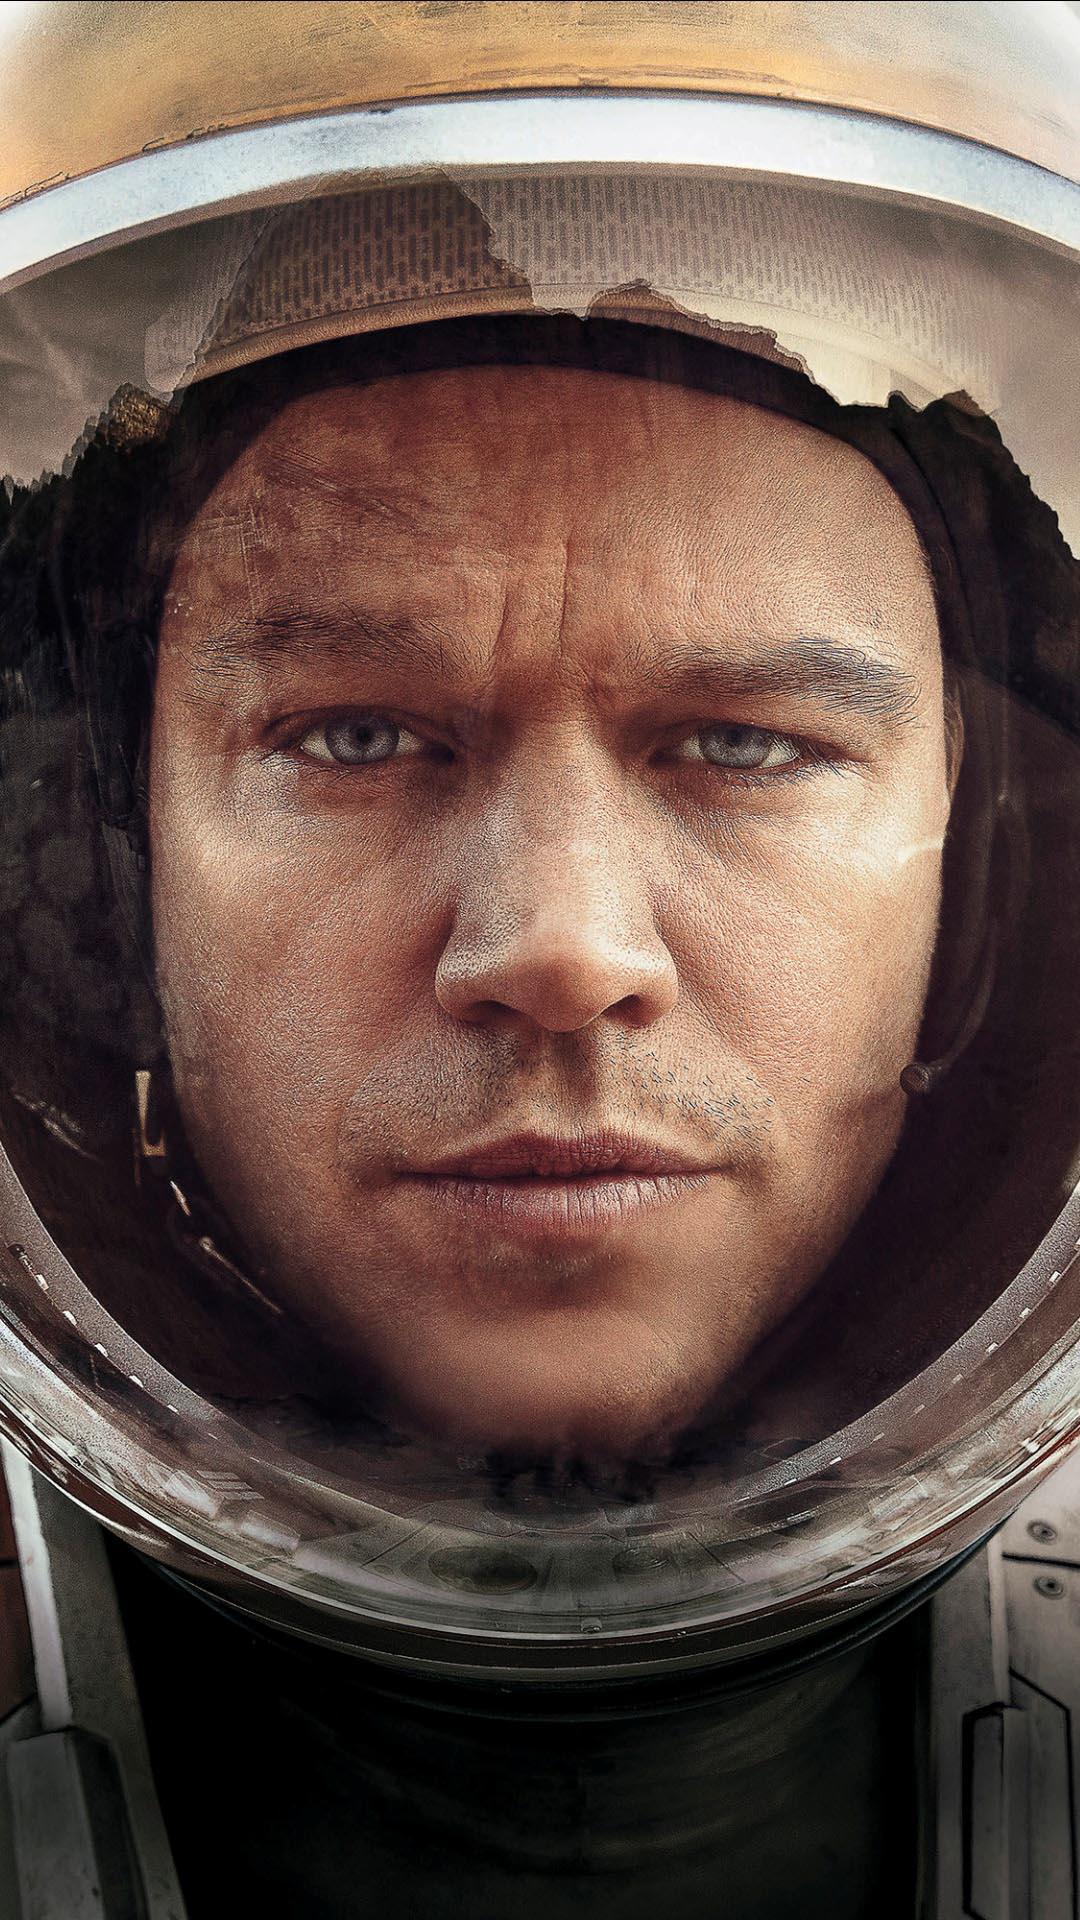 Matt Damon The Martian Helmet Android Wallpaper free download